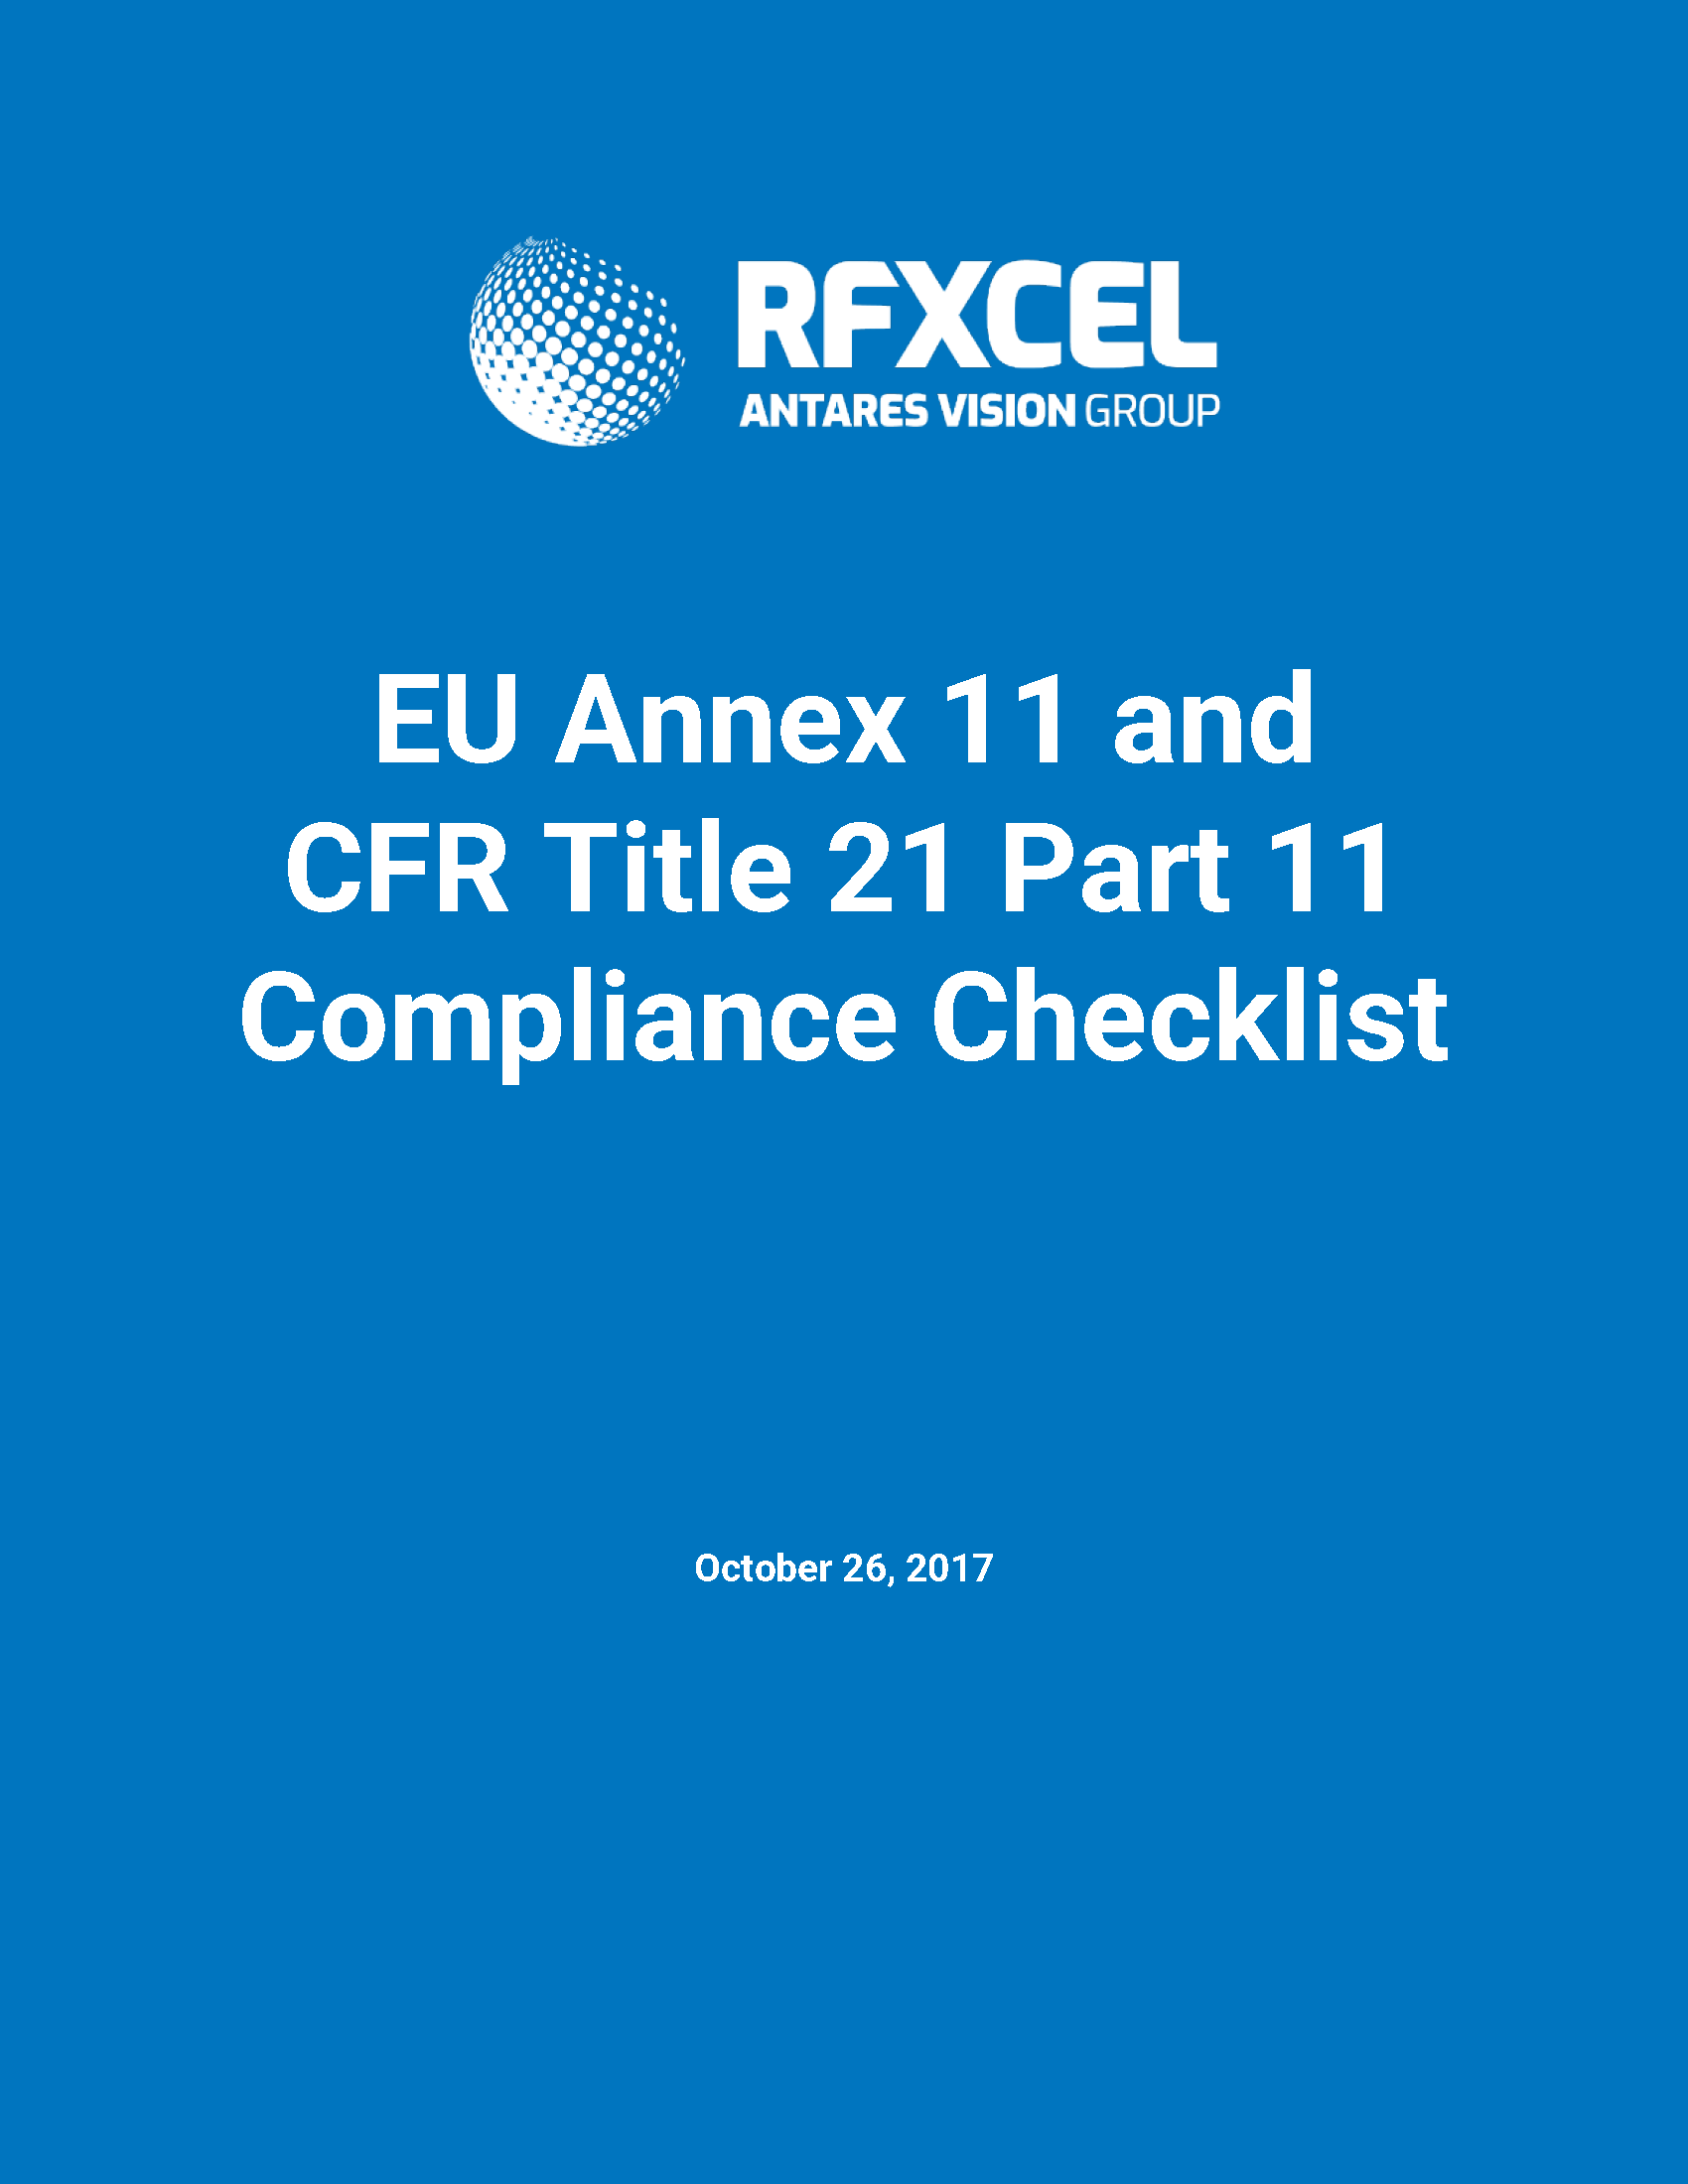 Compliance Checklist: CFR Title 21 Part 11 and EU Annex 11